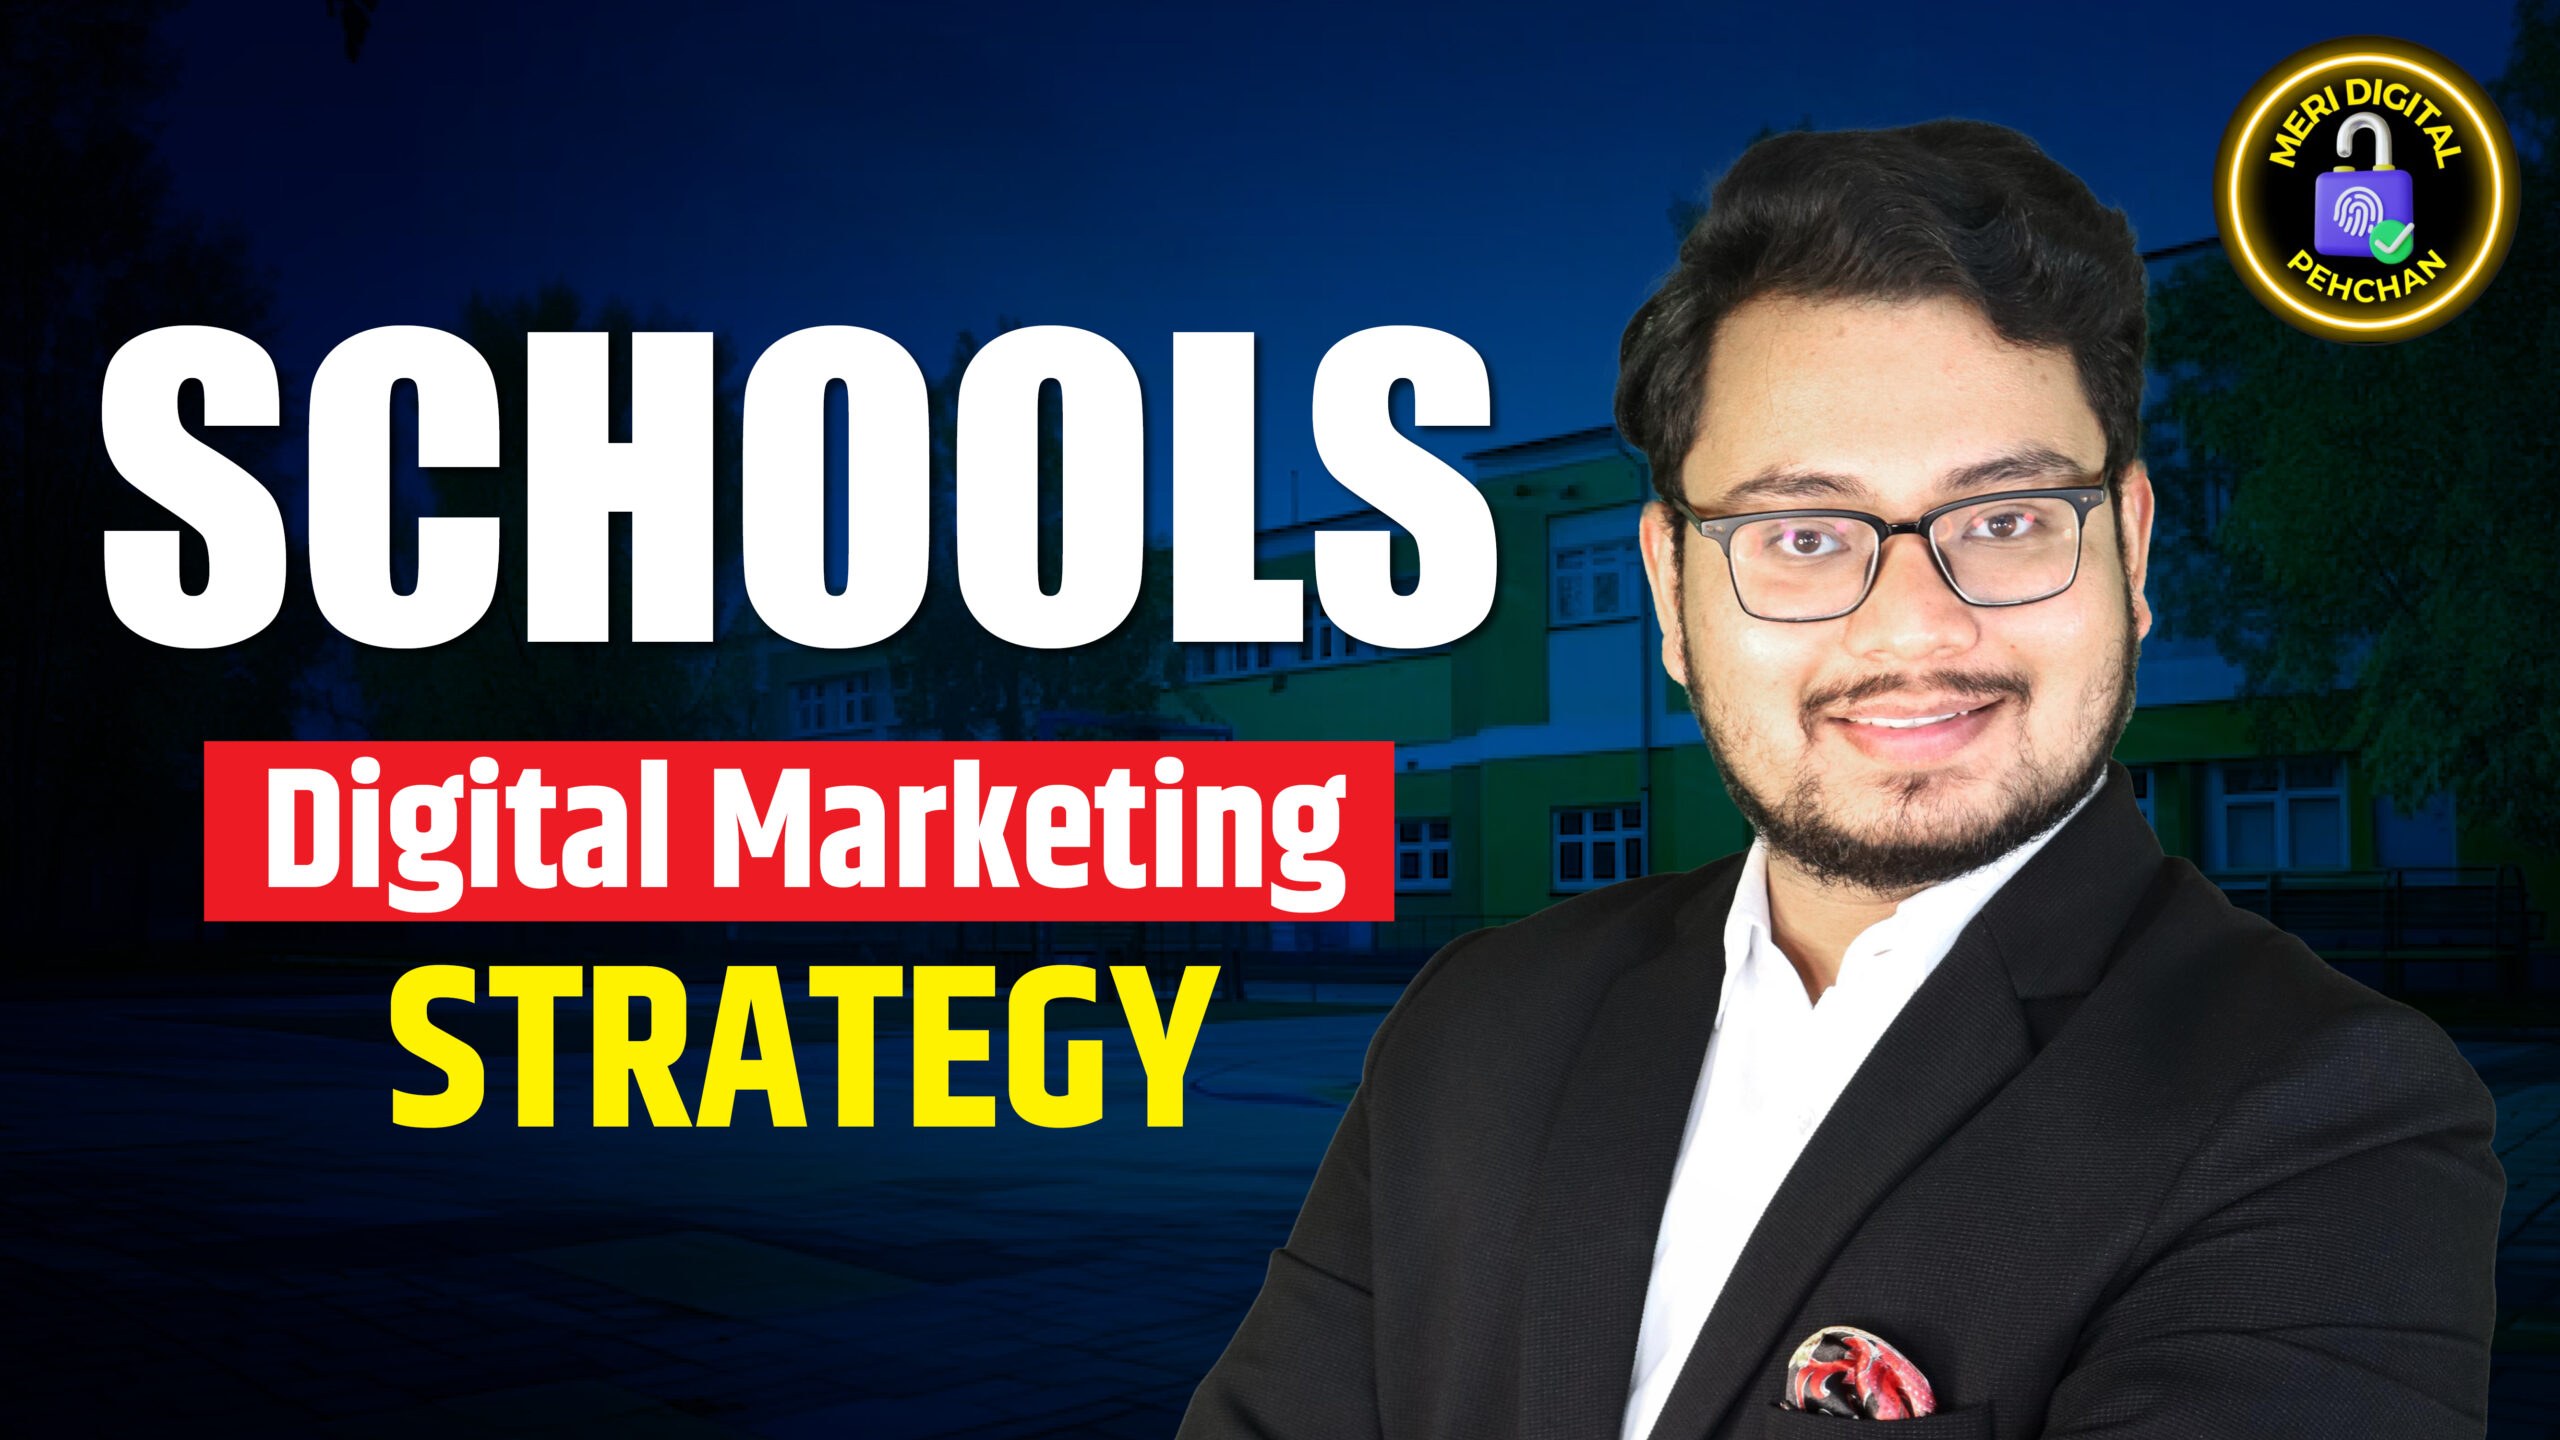 Digital Marketing Strategy for Schools & E-Learning